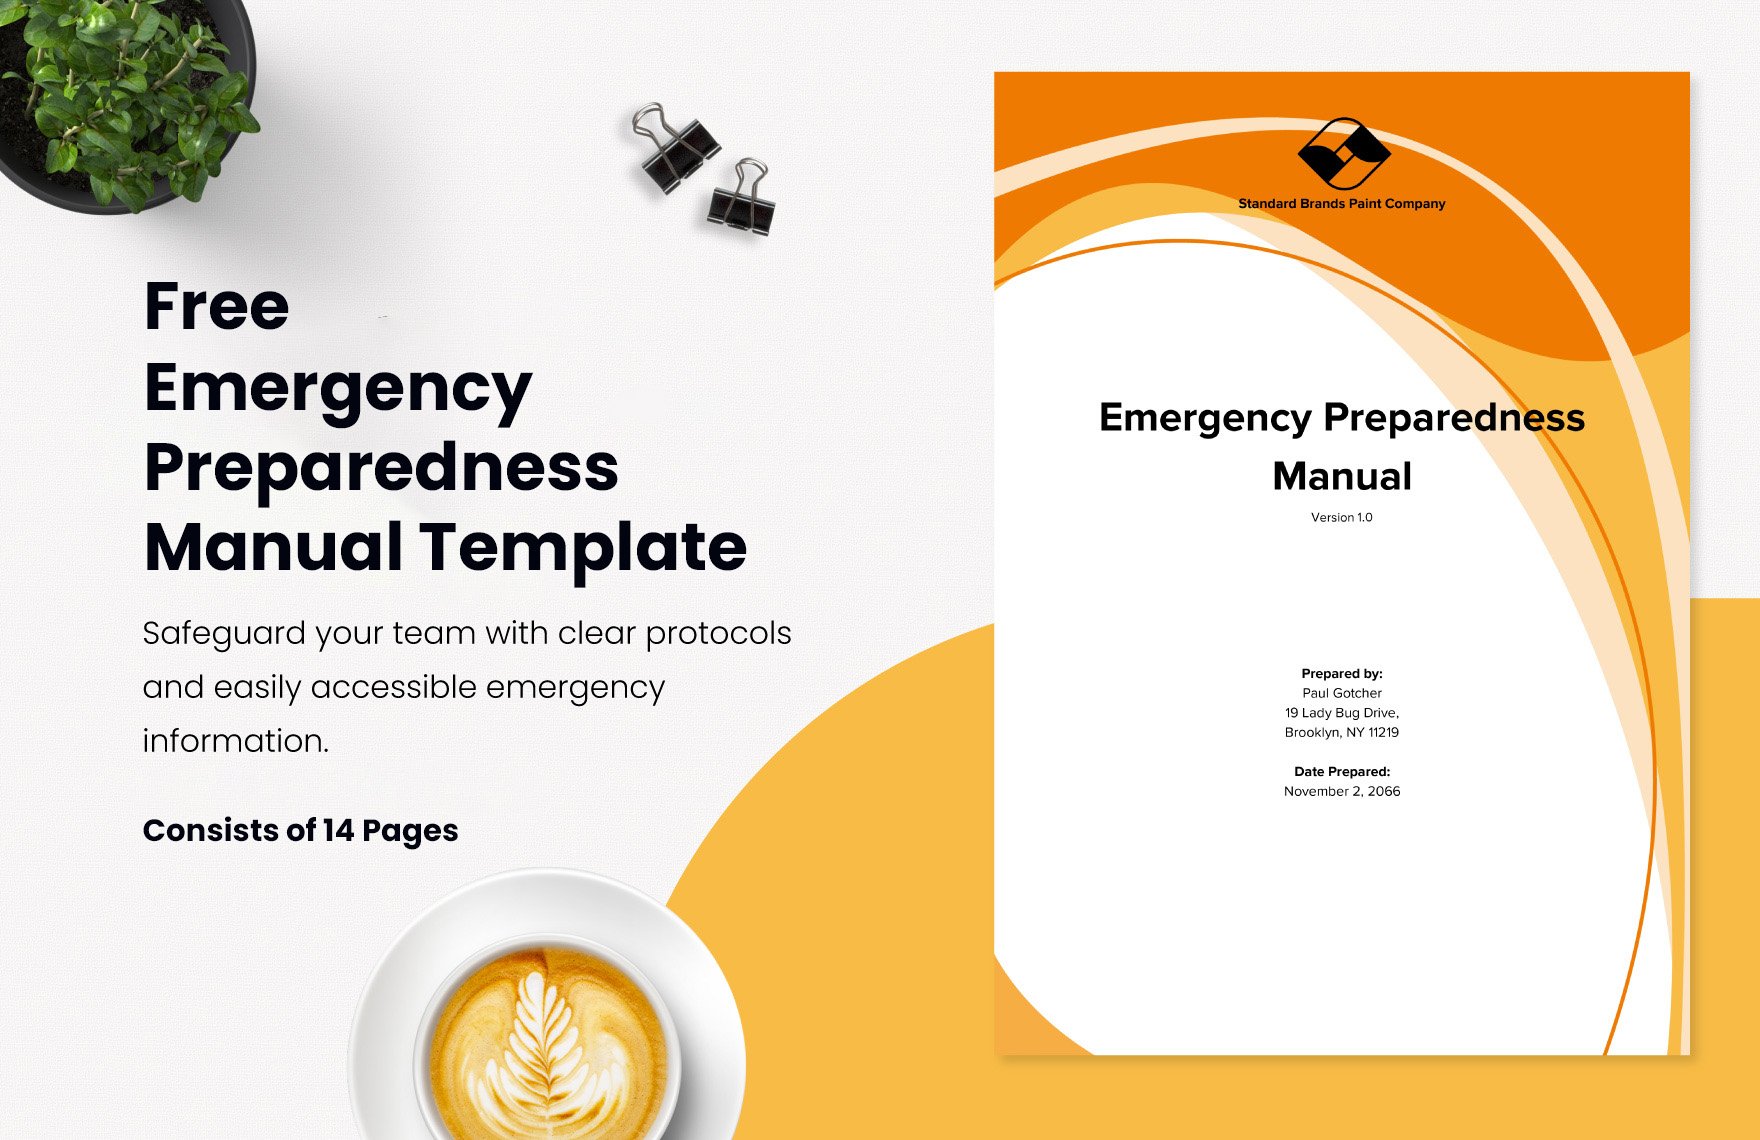 Free Emergency Preparedness Manual Template in Word, Google Docs, PDF